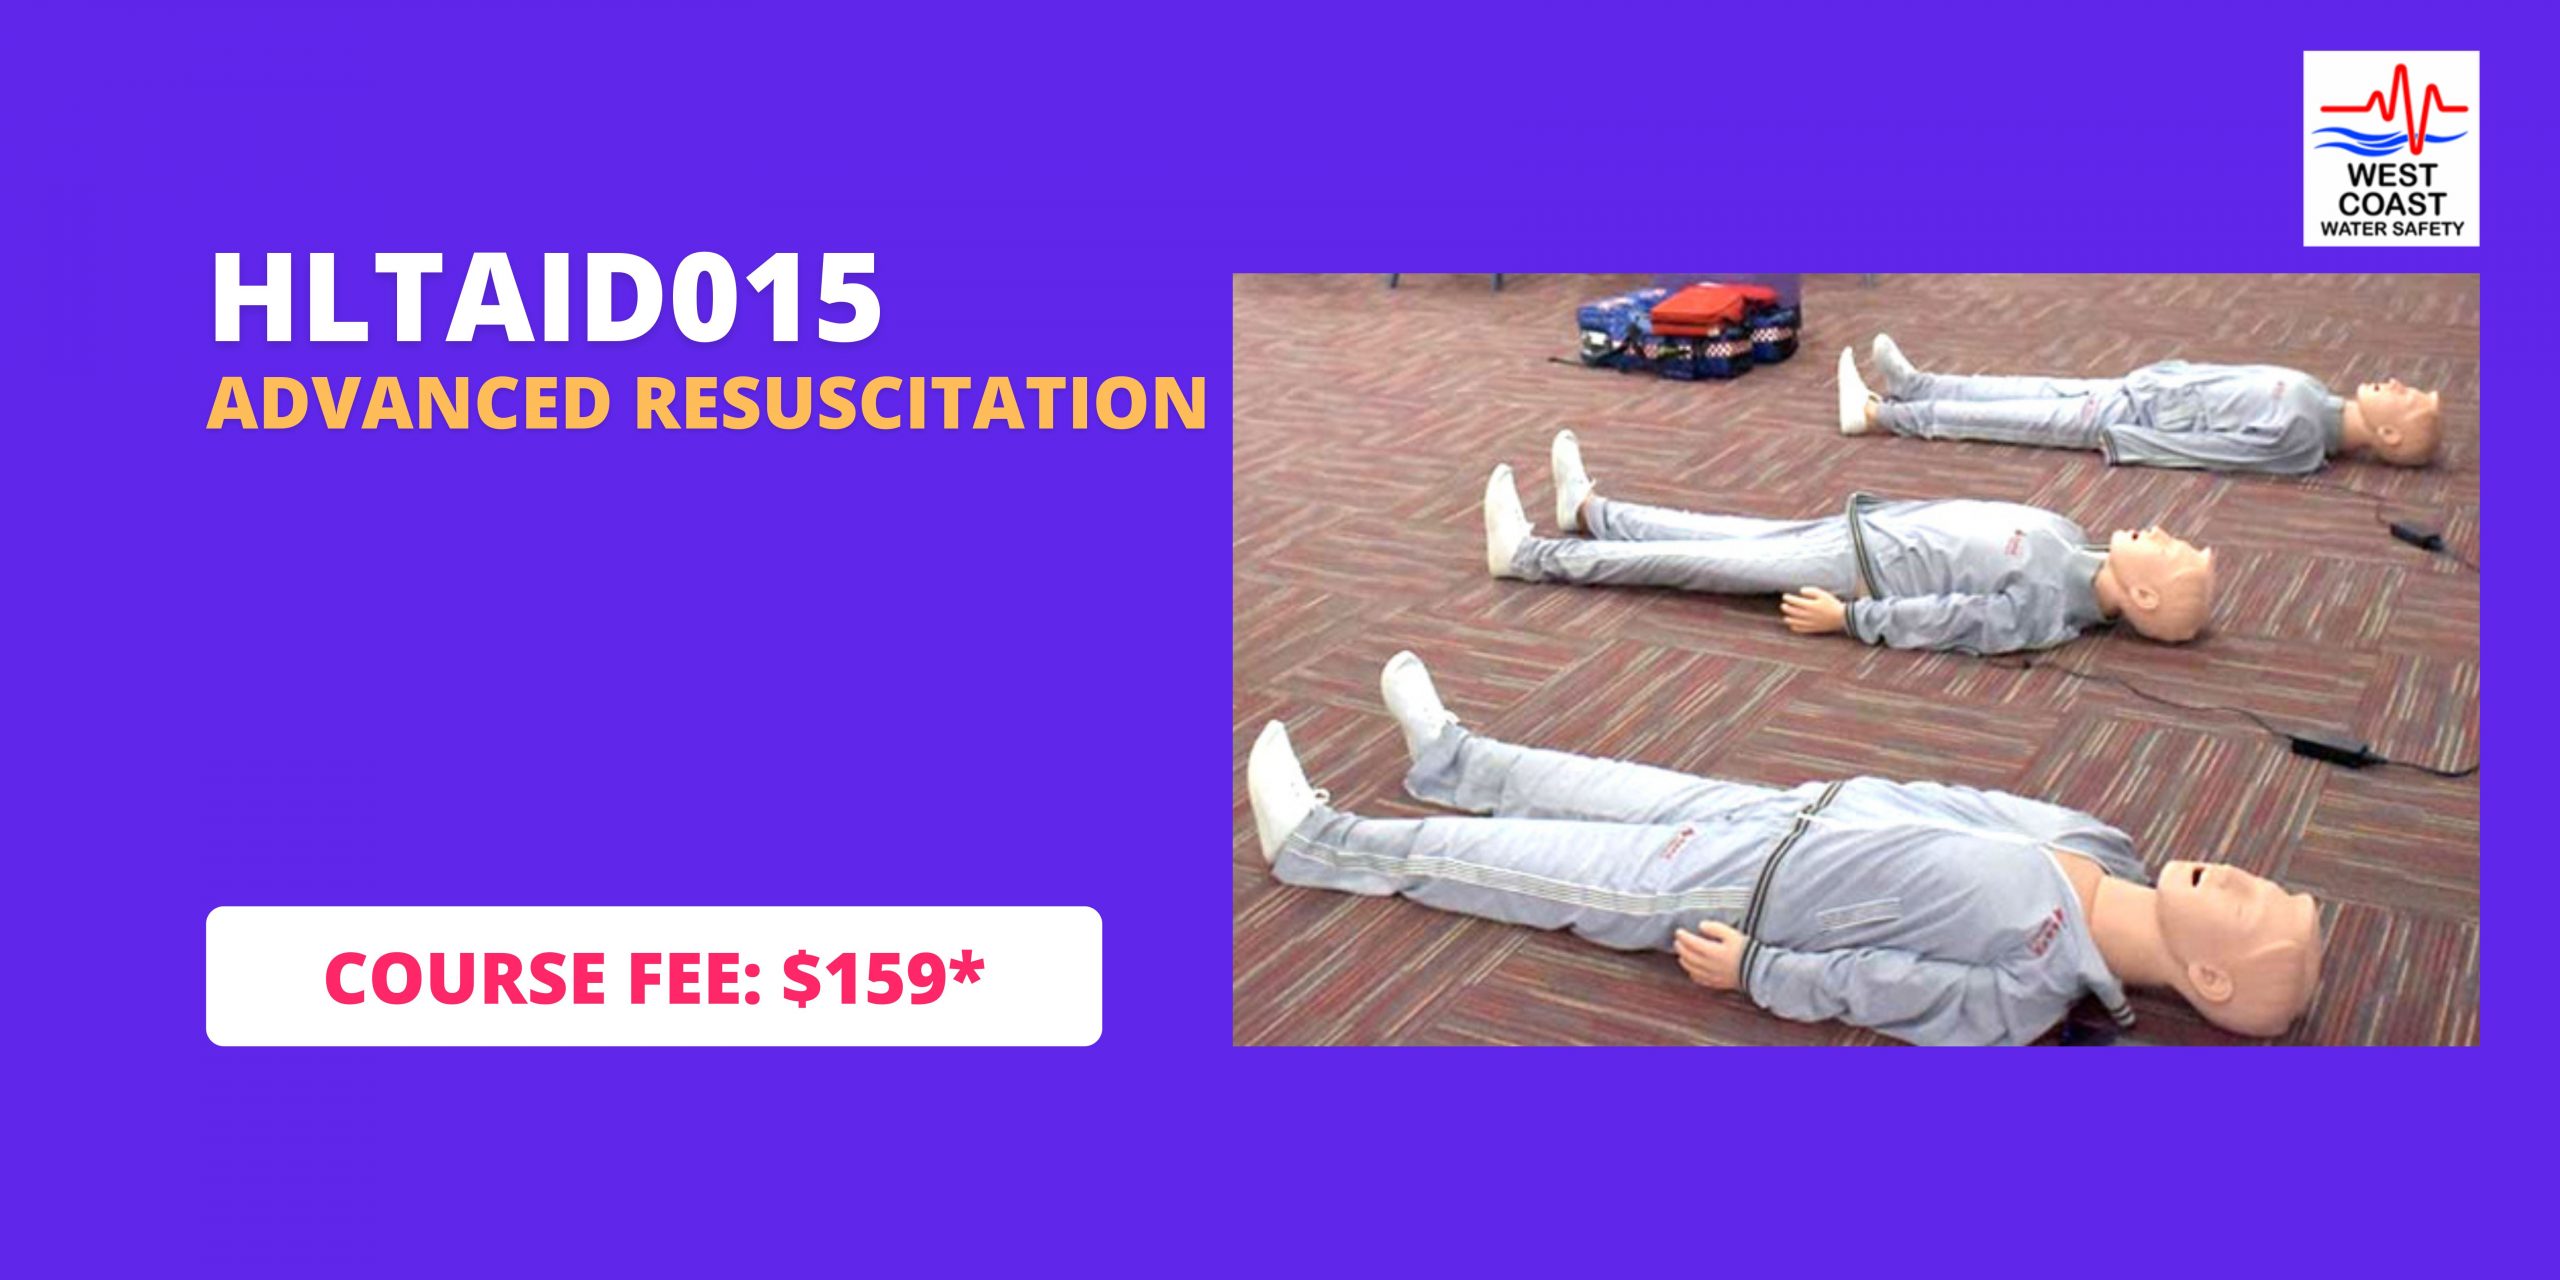 HLTAID015 Advanced Resuscitation